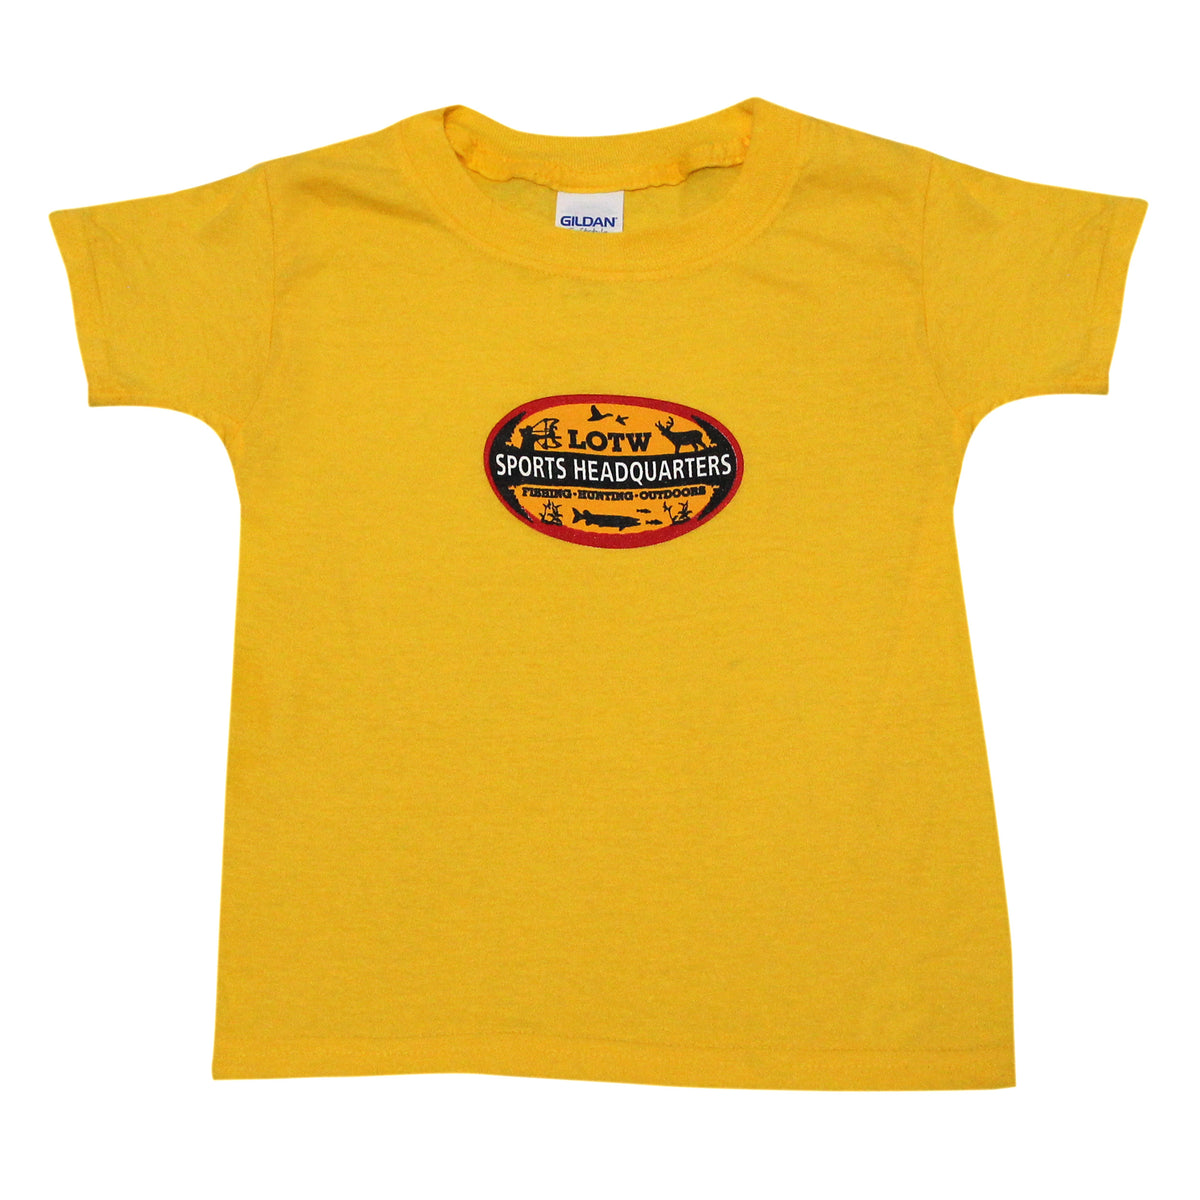 LOTW Sports Headquarters Toddler T-Shirt - Yellow